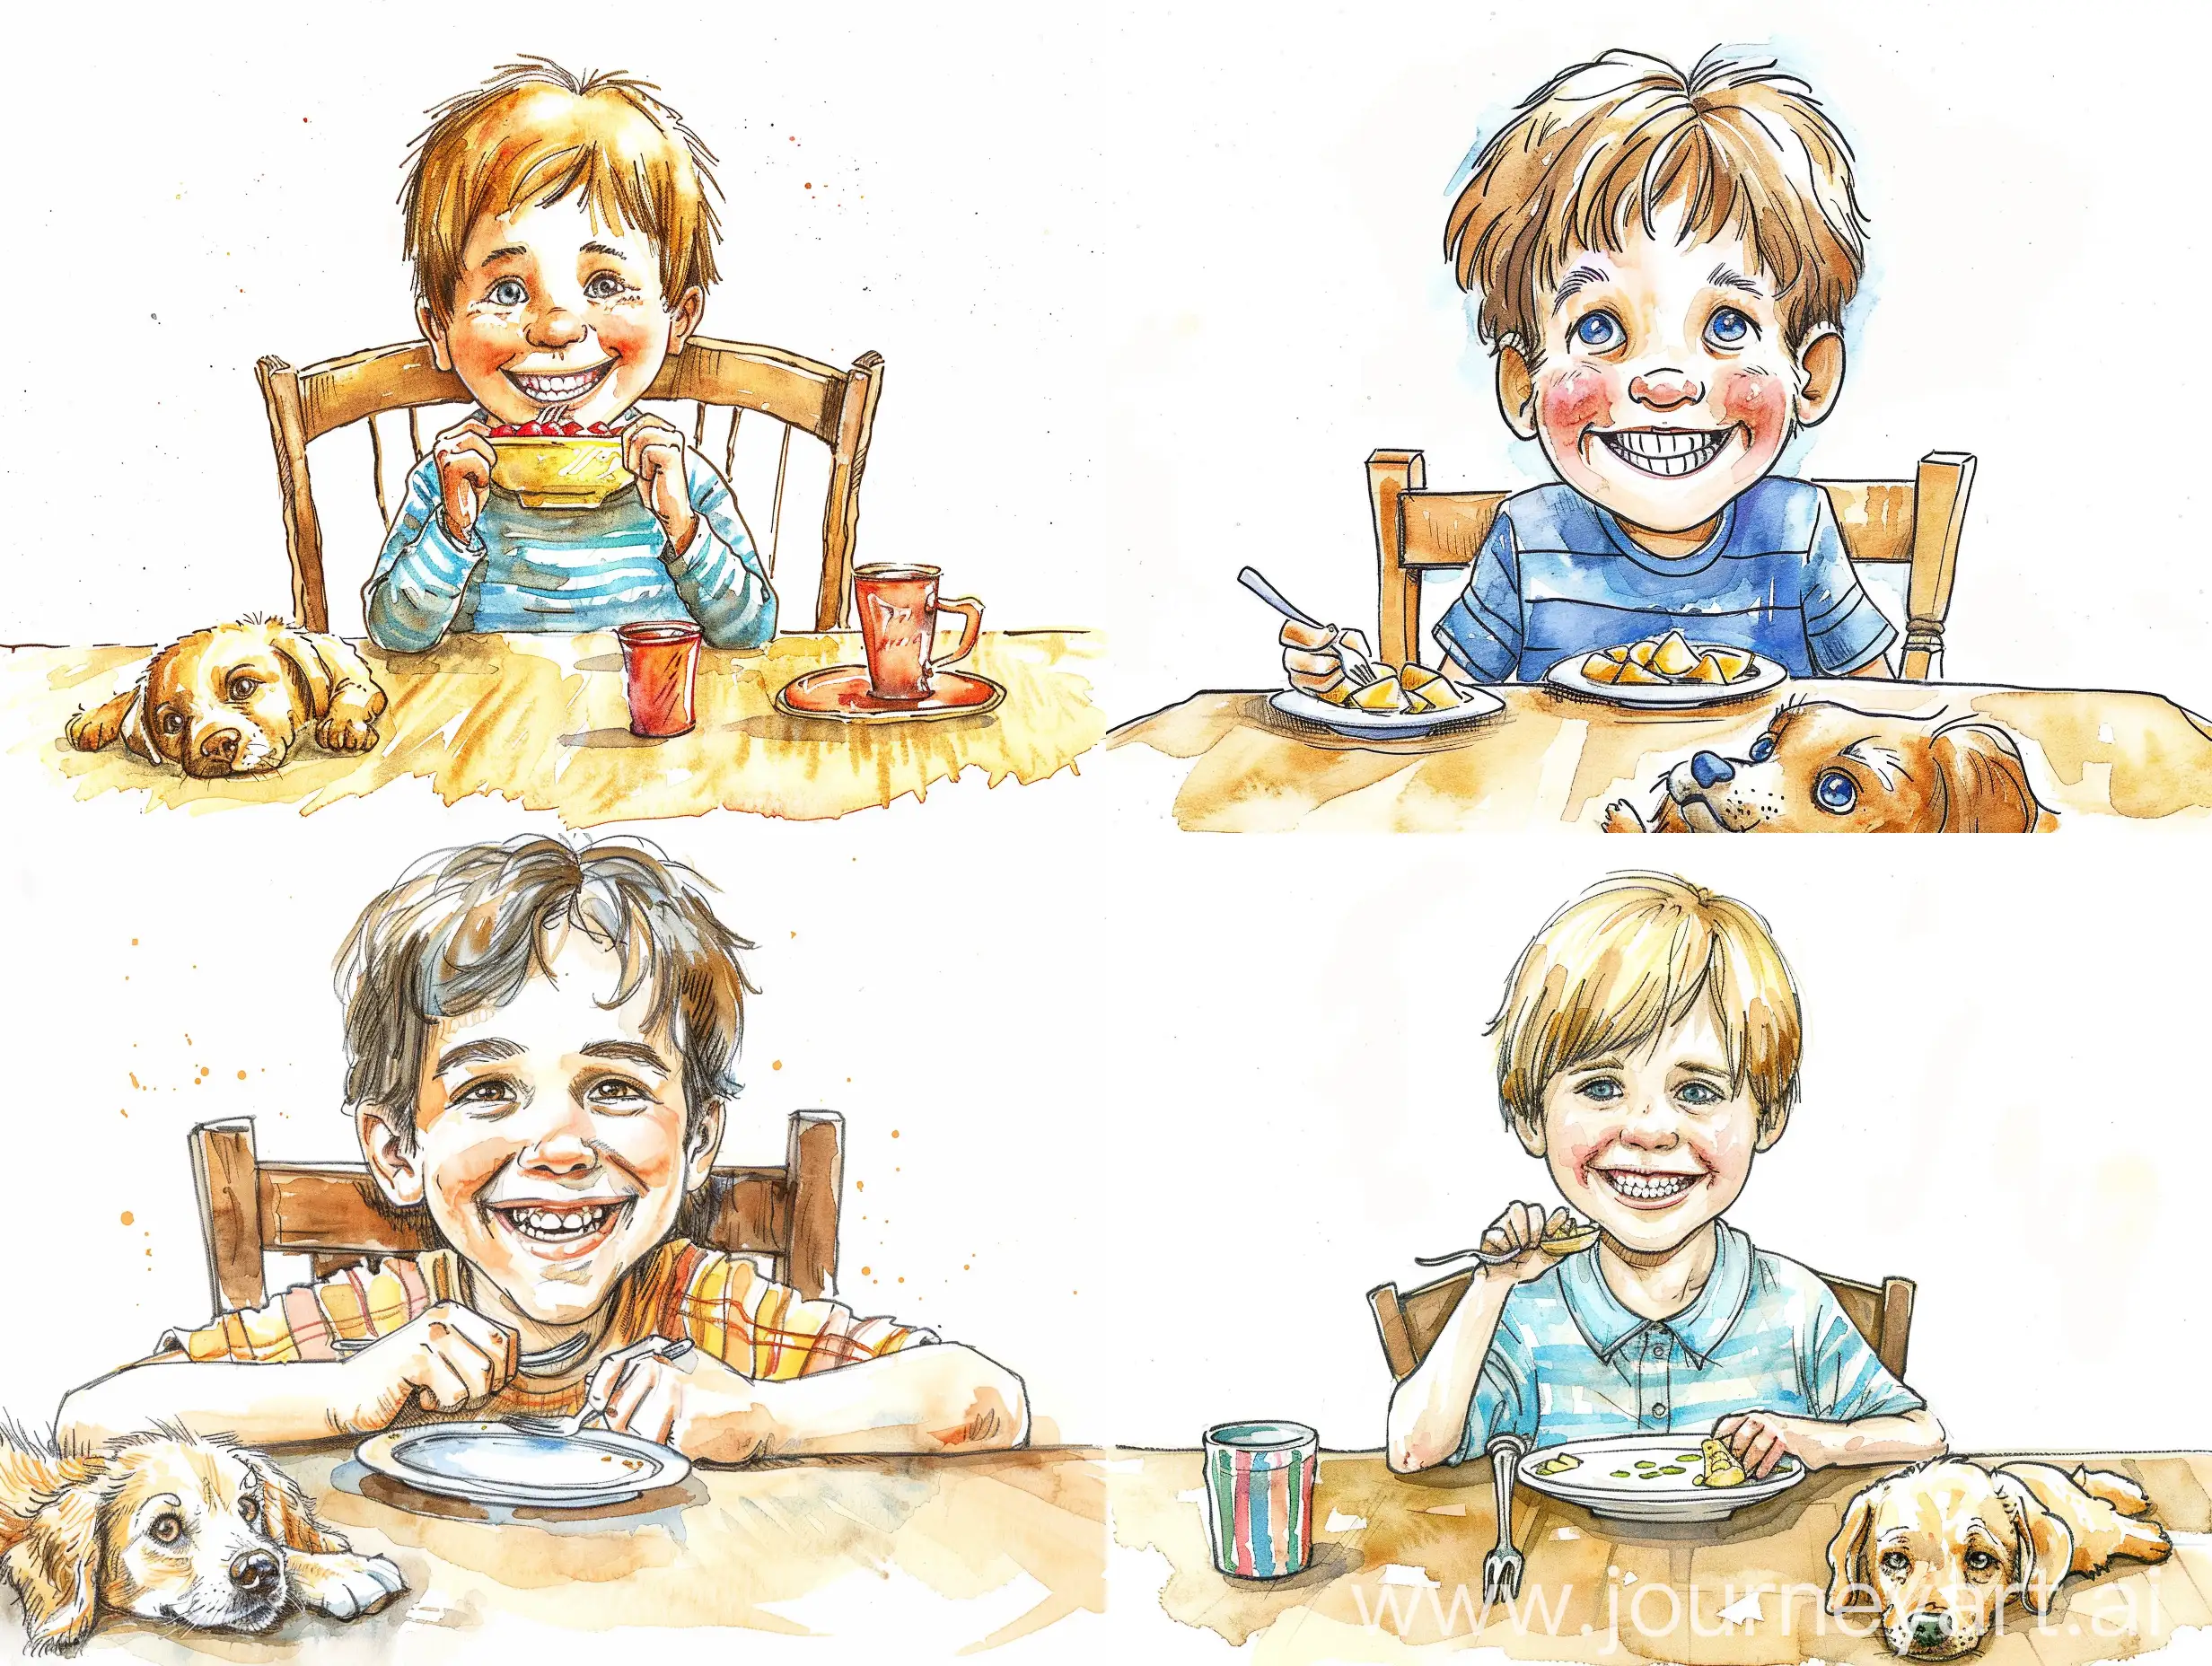 Joyful-Dinner-Boy-and-Dog-Watercolor-Illustration